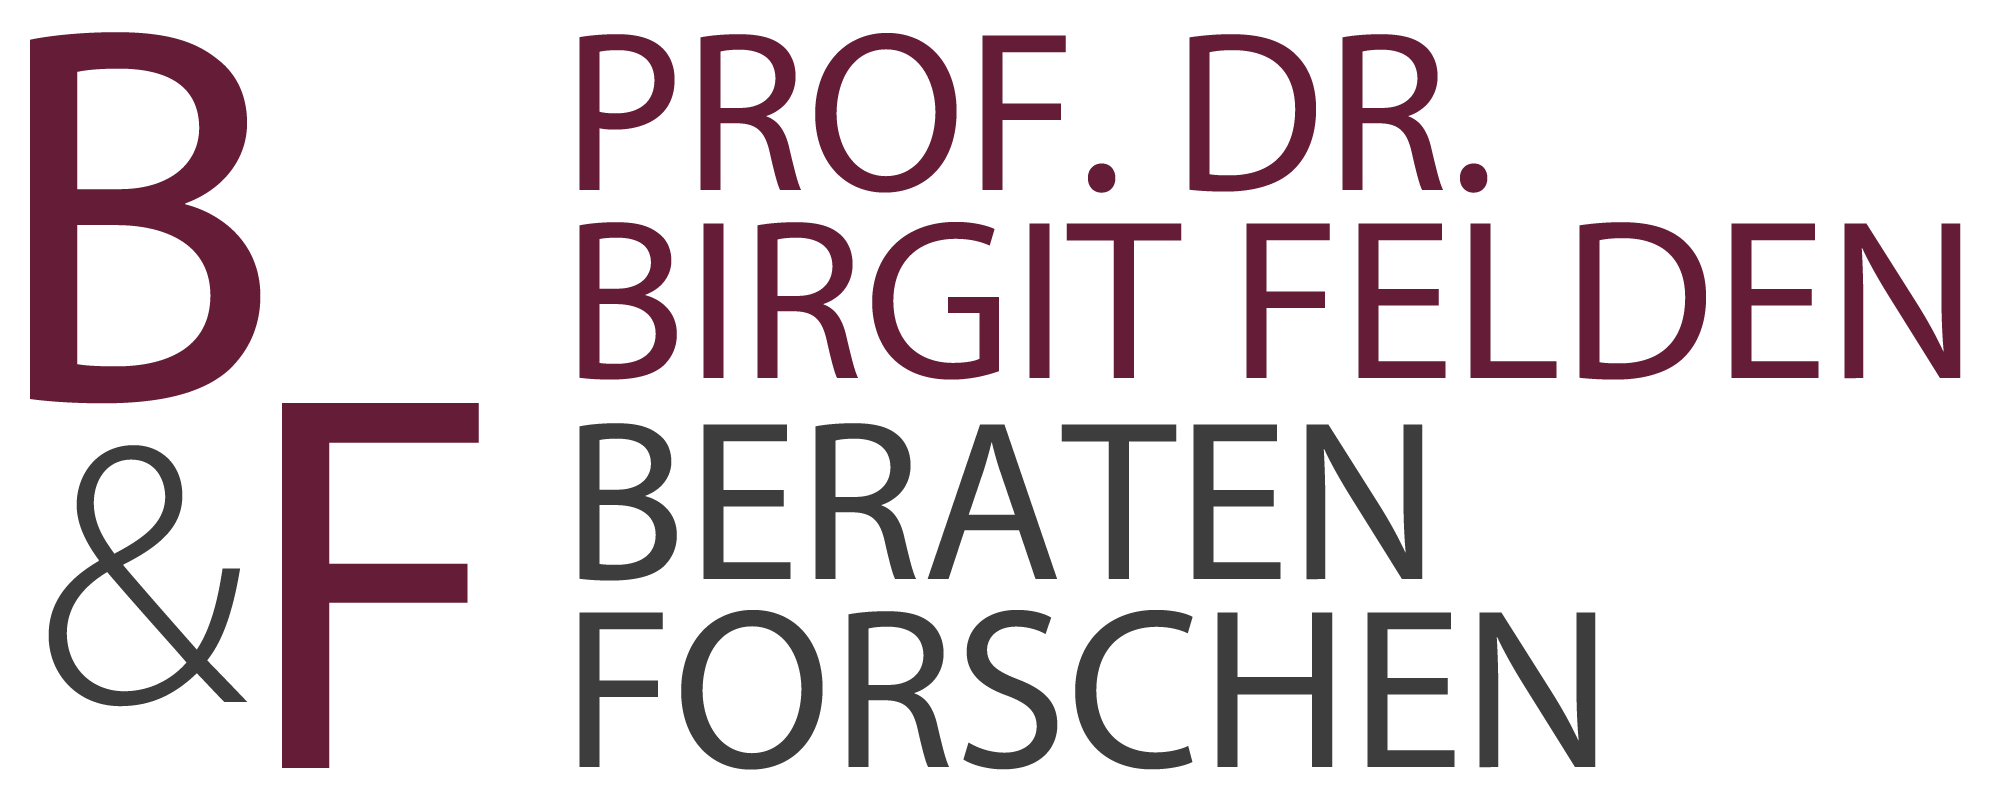 Prof. Dr. Birgit Felden